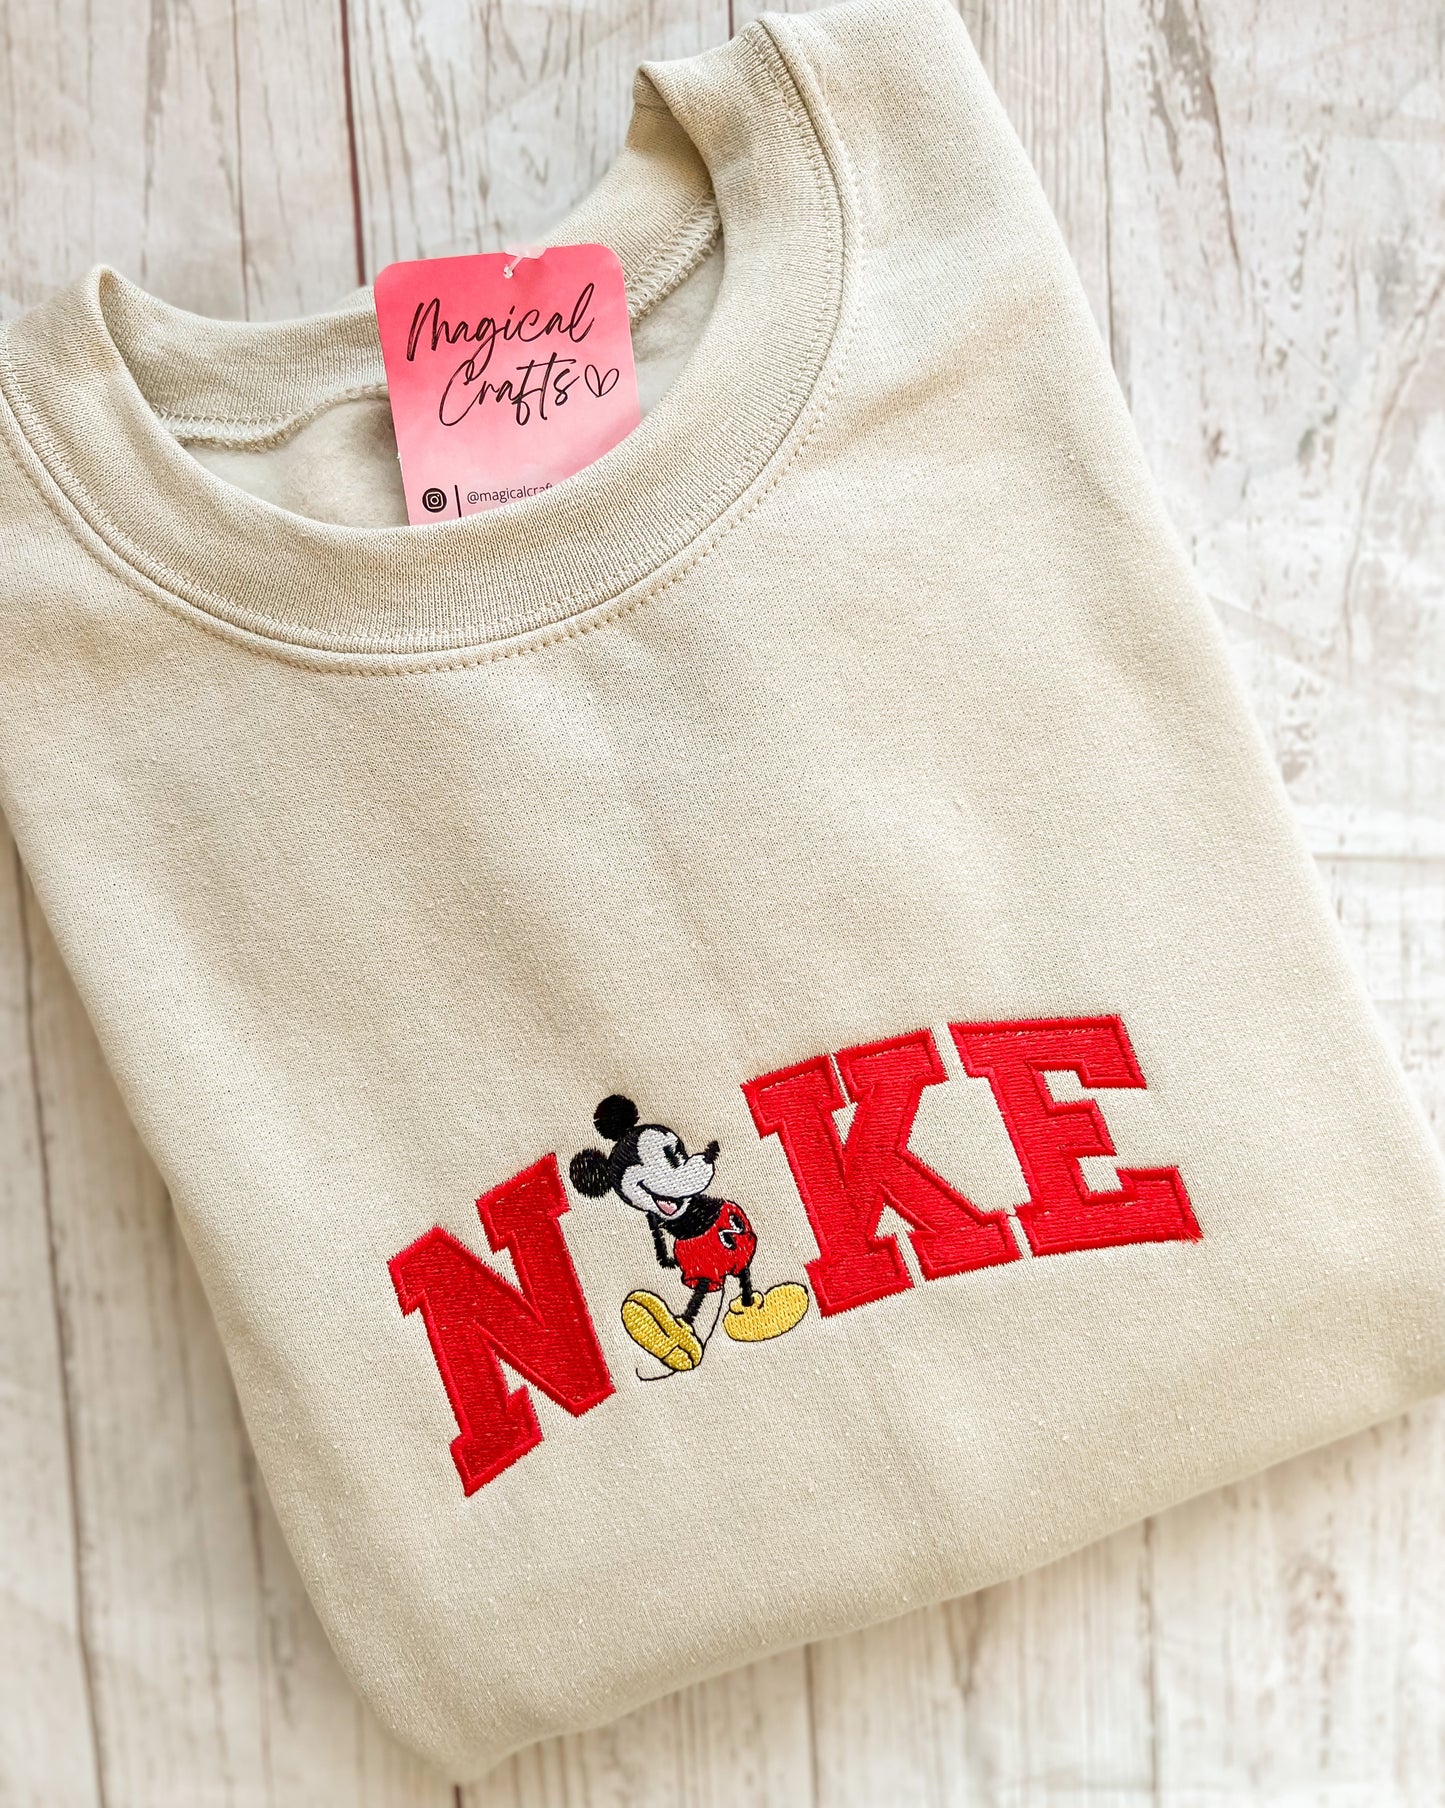 Mr.Mouse Embroidered Crewneck Sweatshirt - Sand